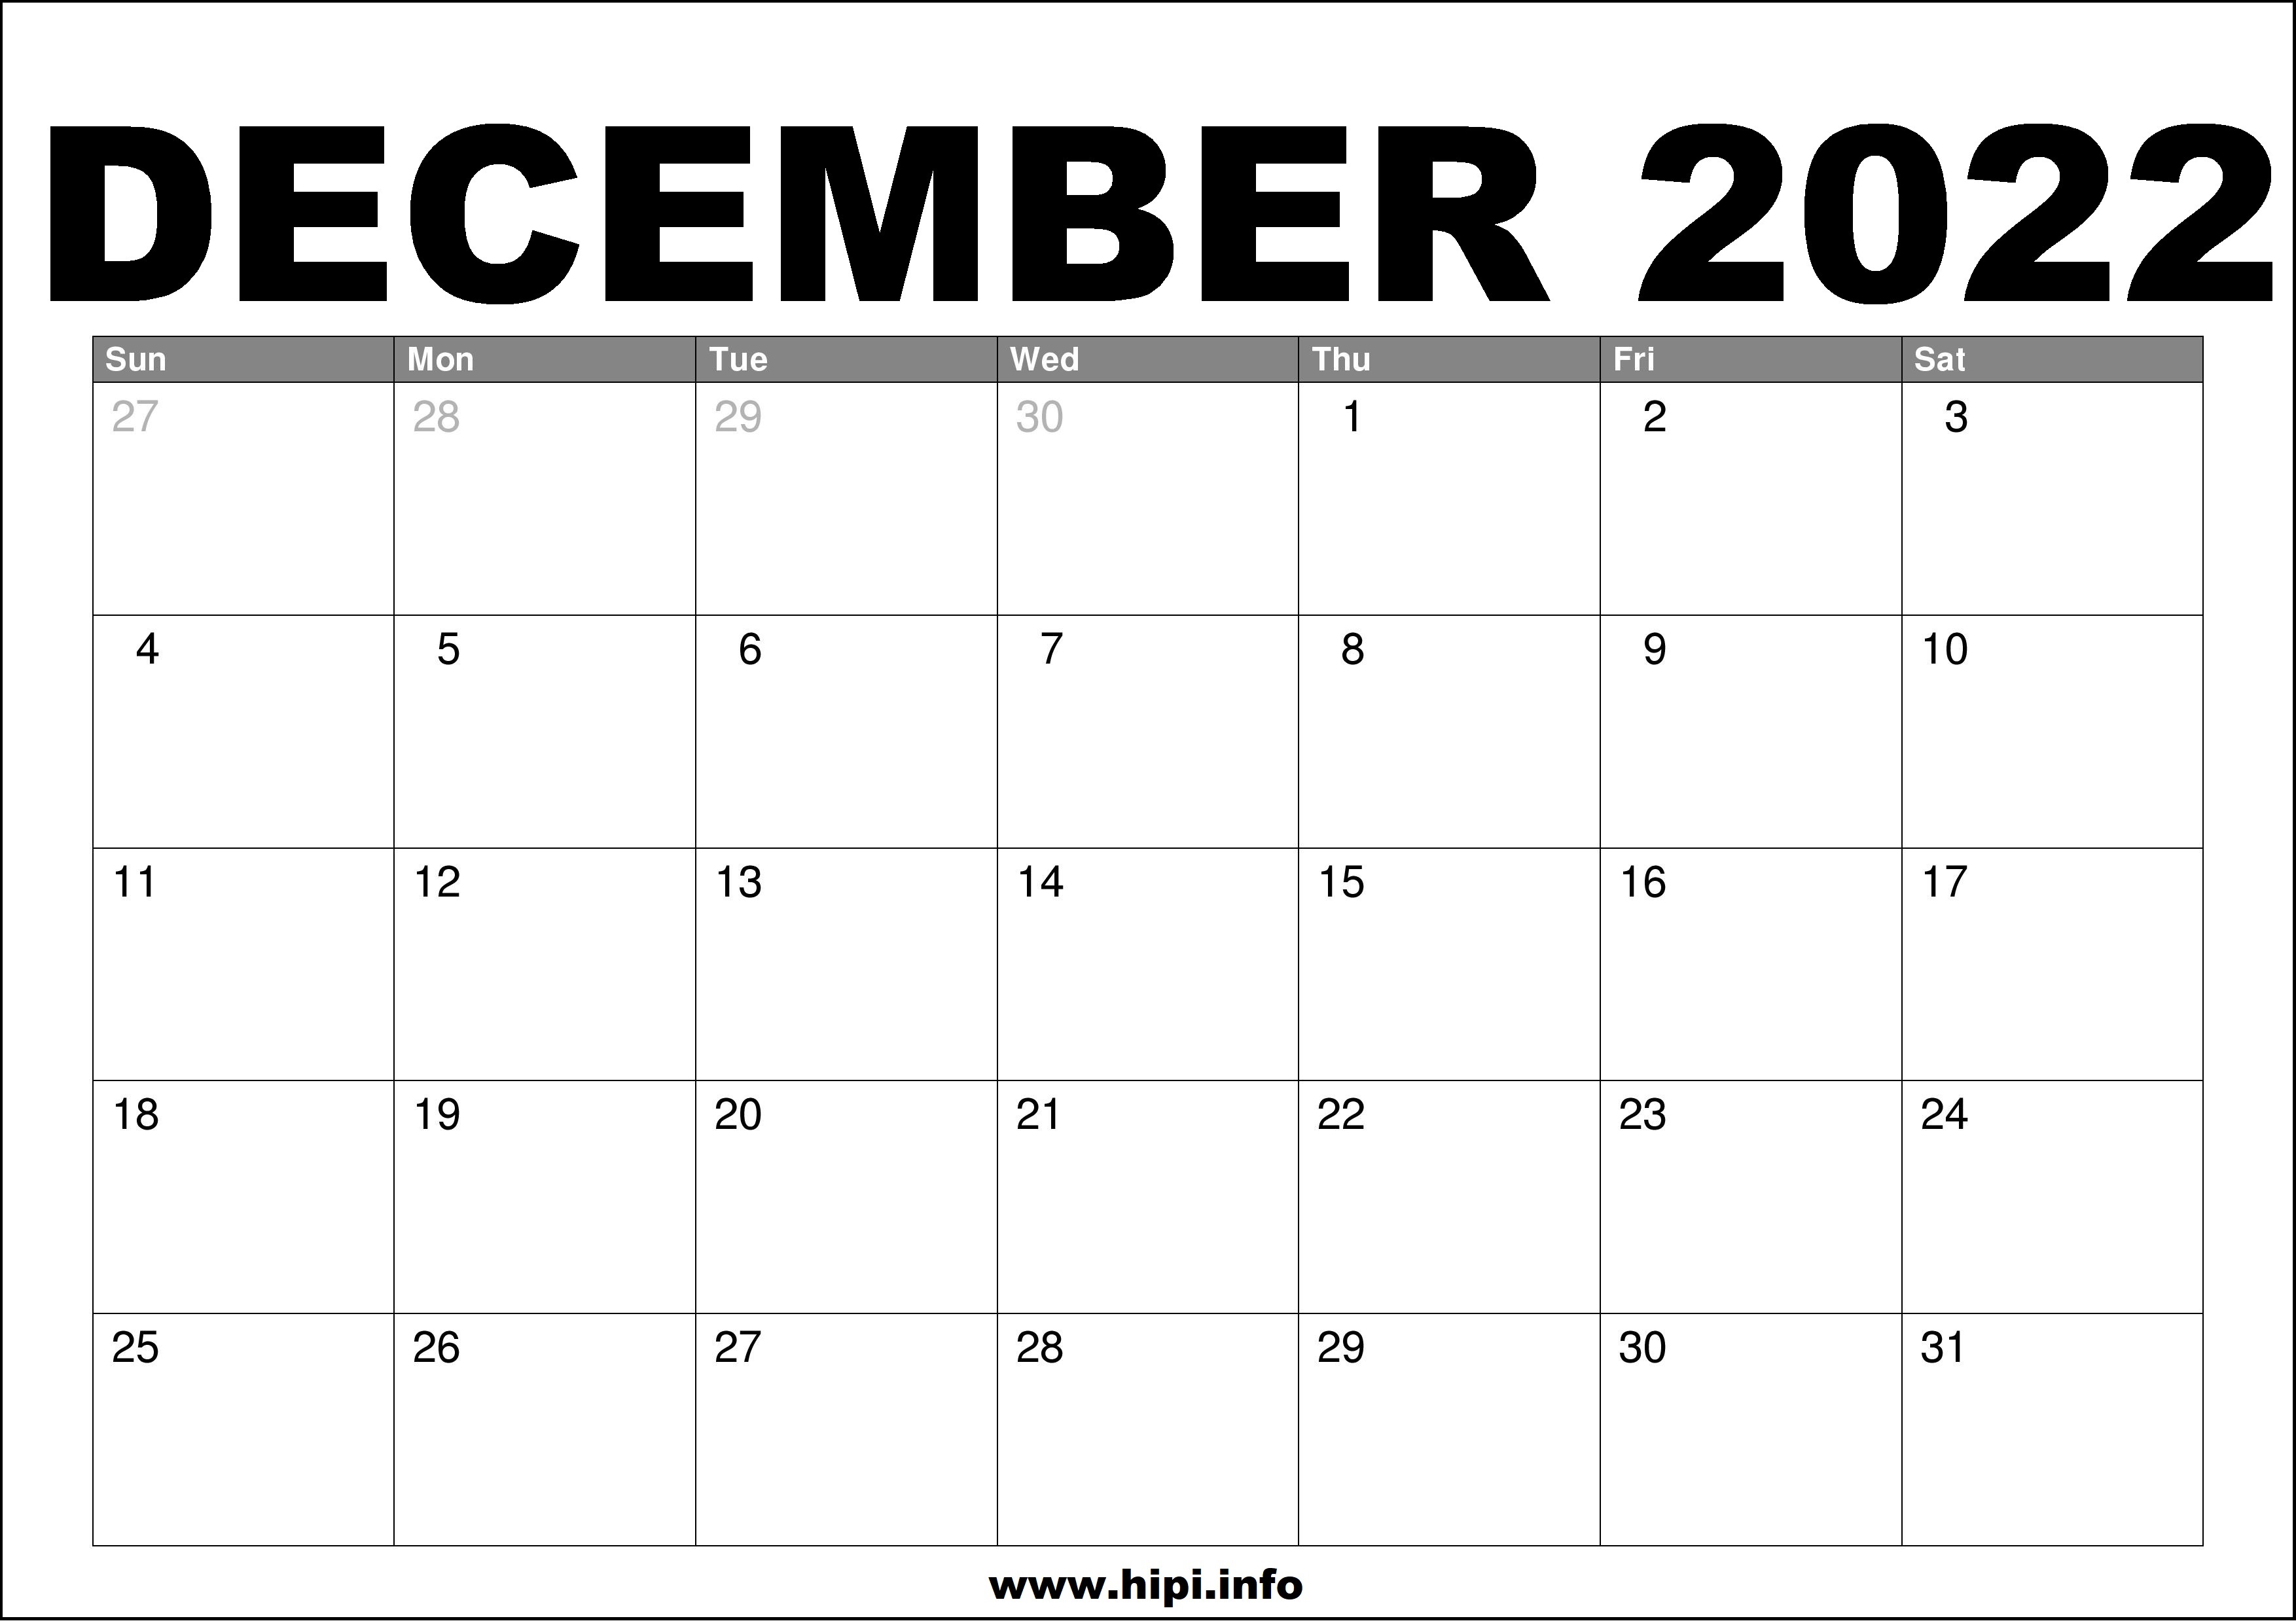 Dec 2022 Printable Calendar December 2022 Calendar Printable Free - Hipi.info | Calendars Printable Free